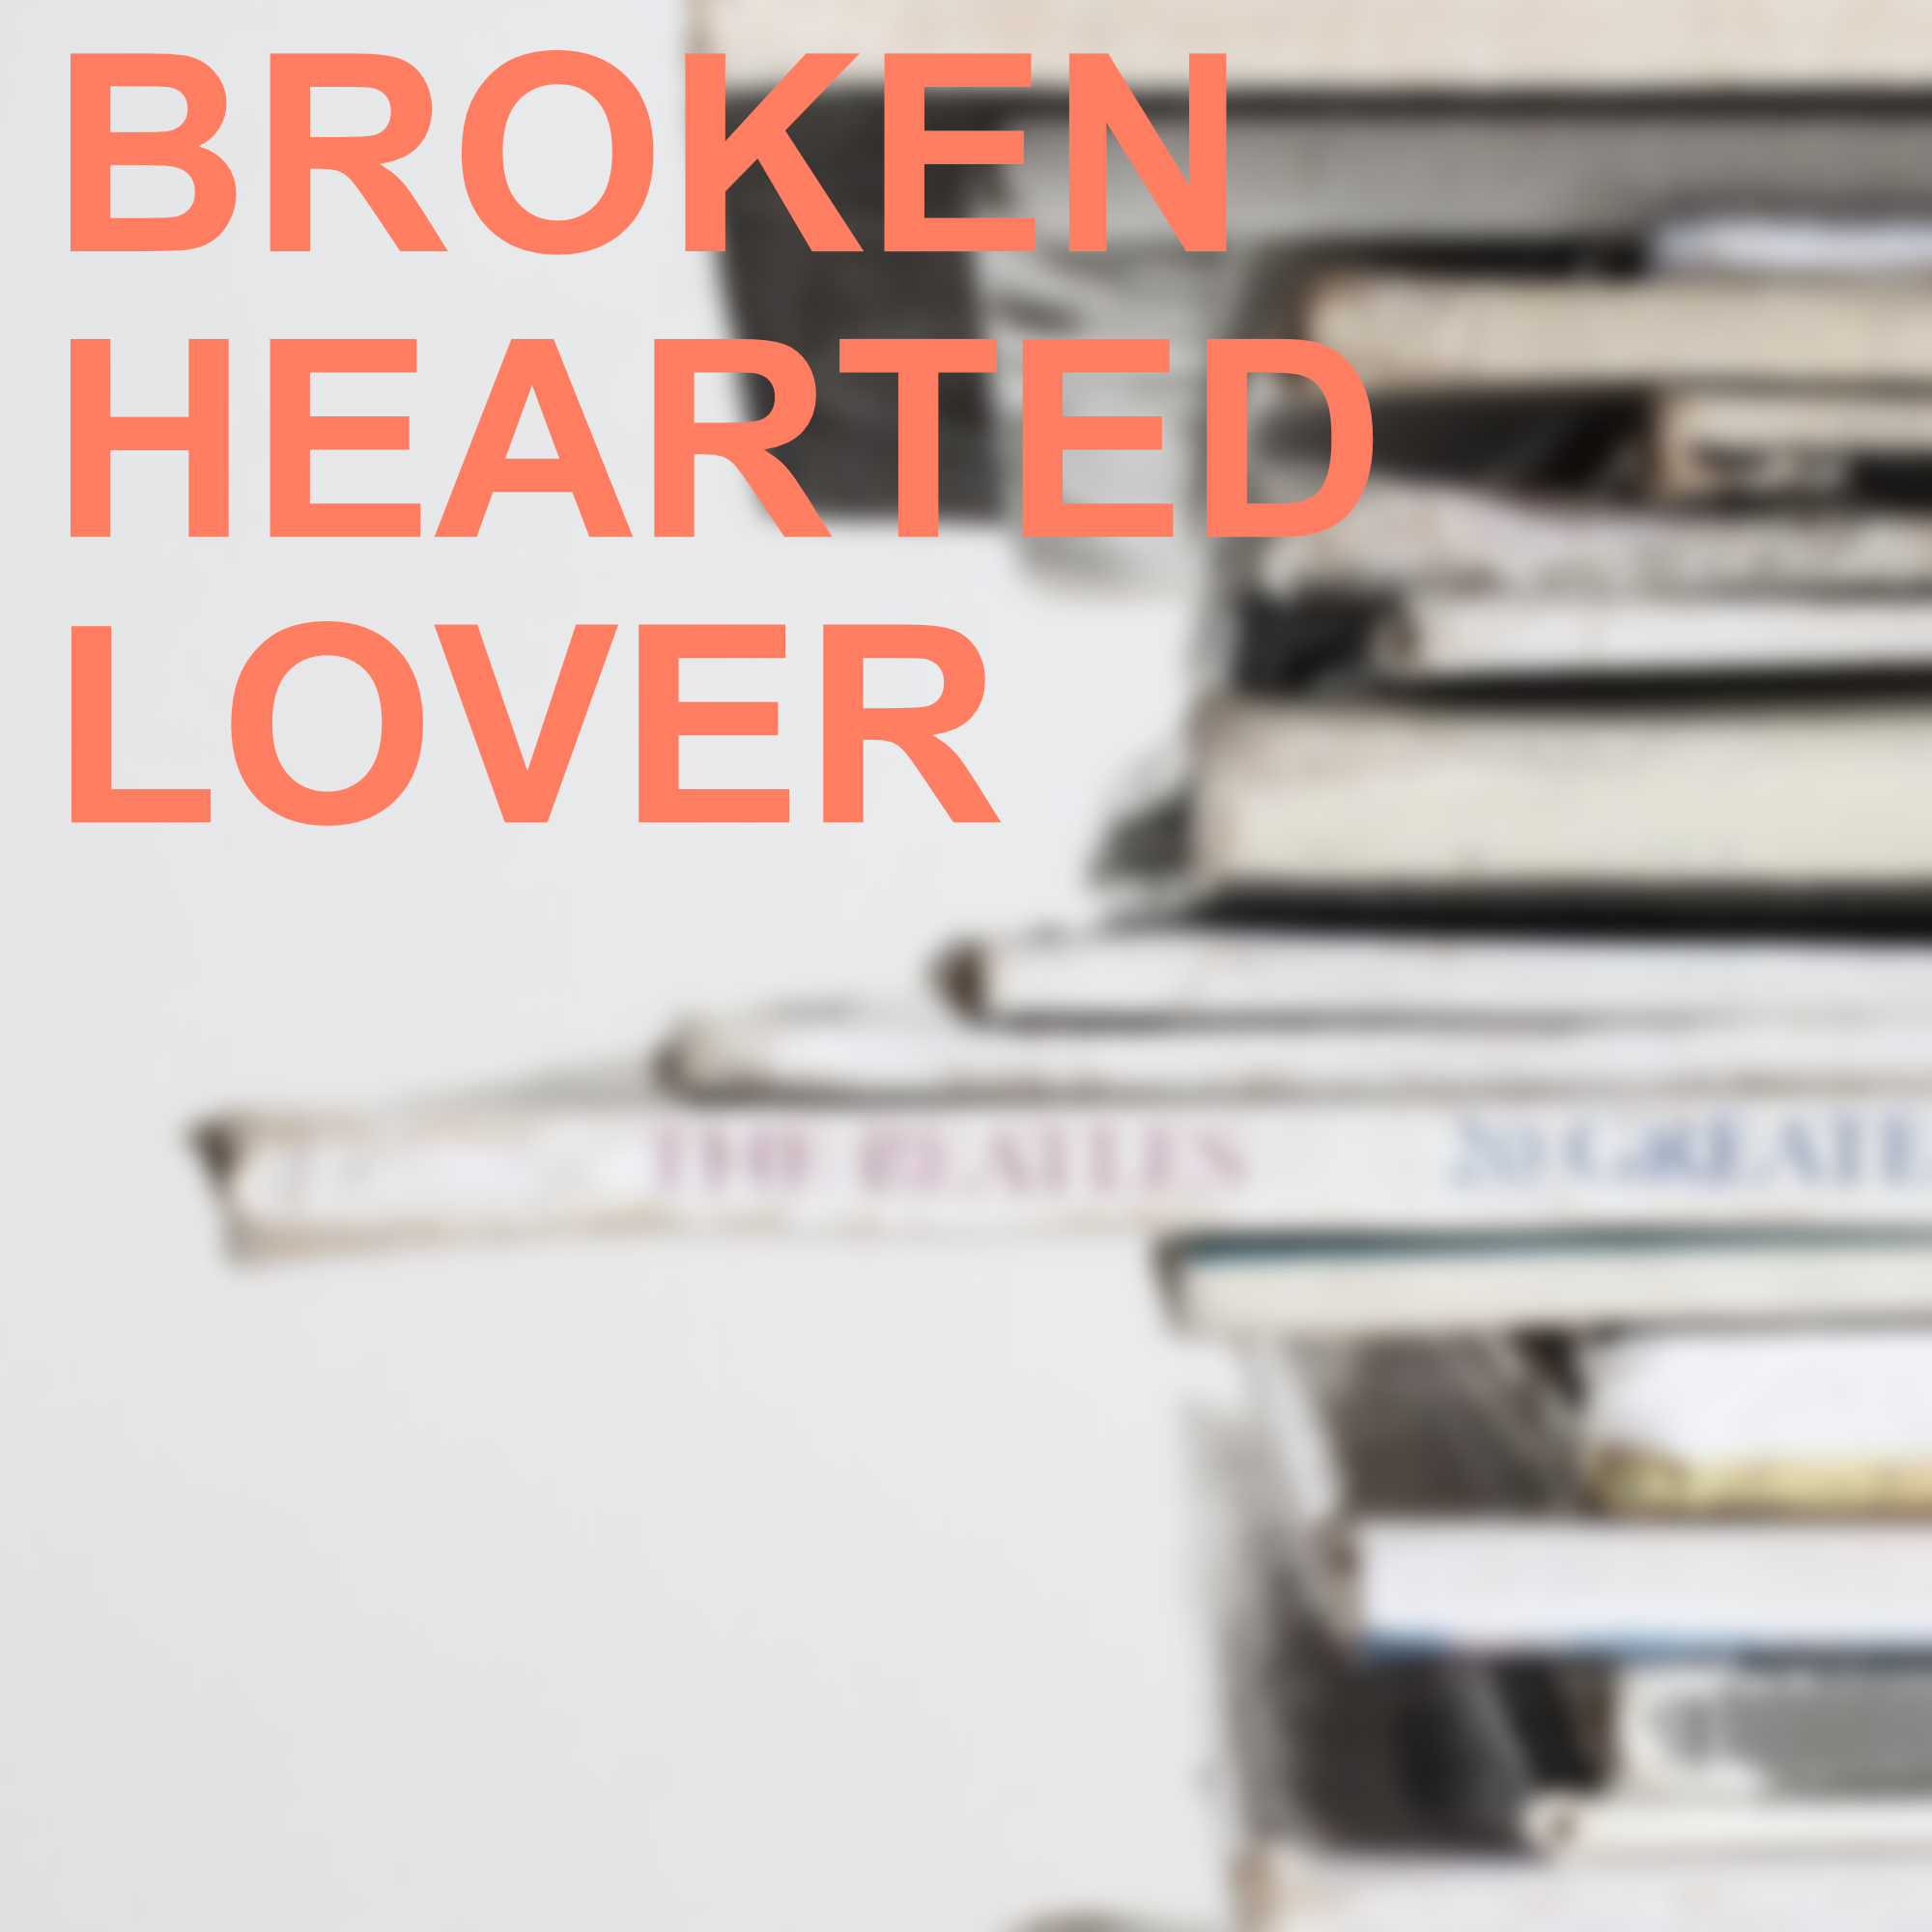 The Broken Hearted Lover